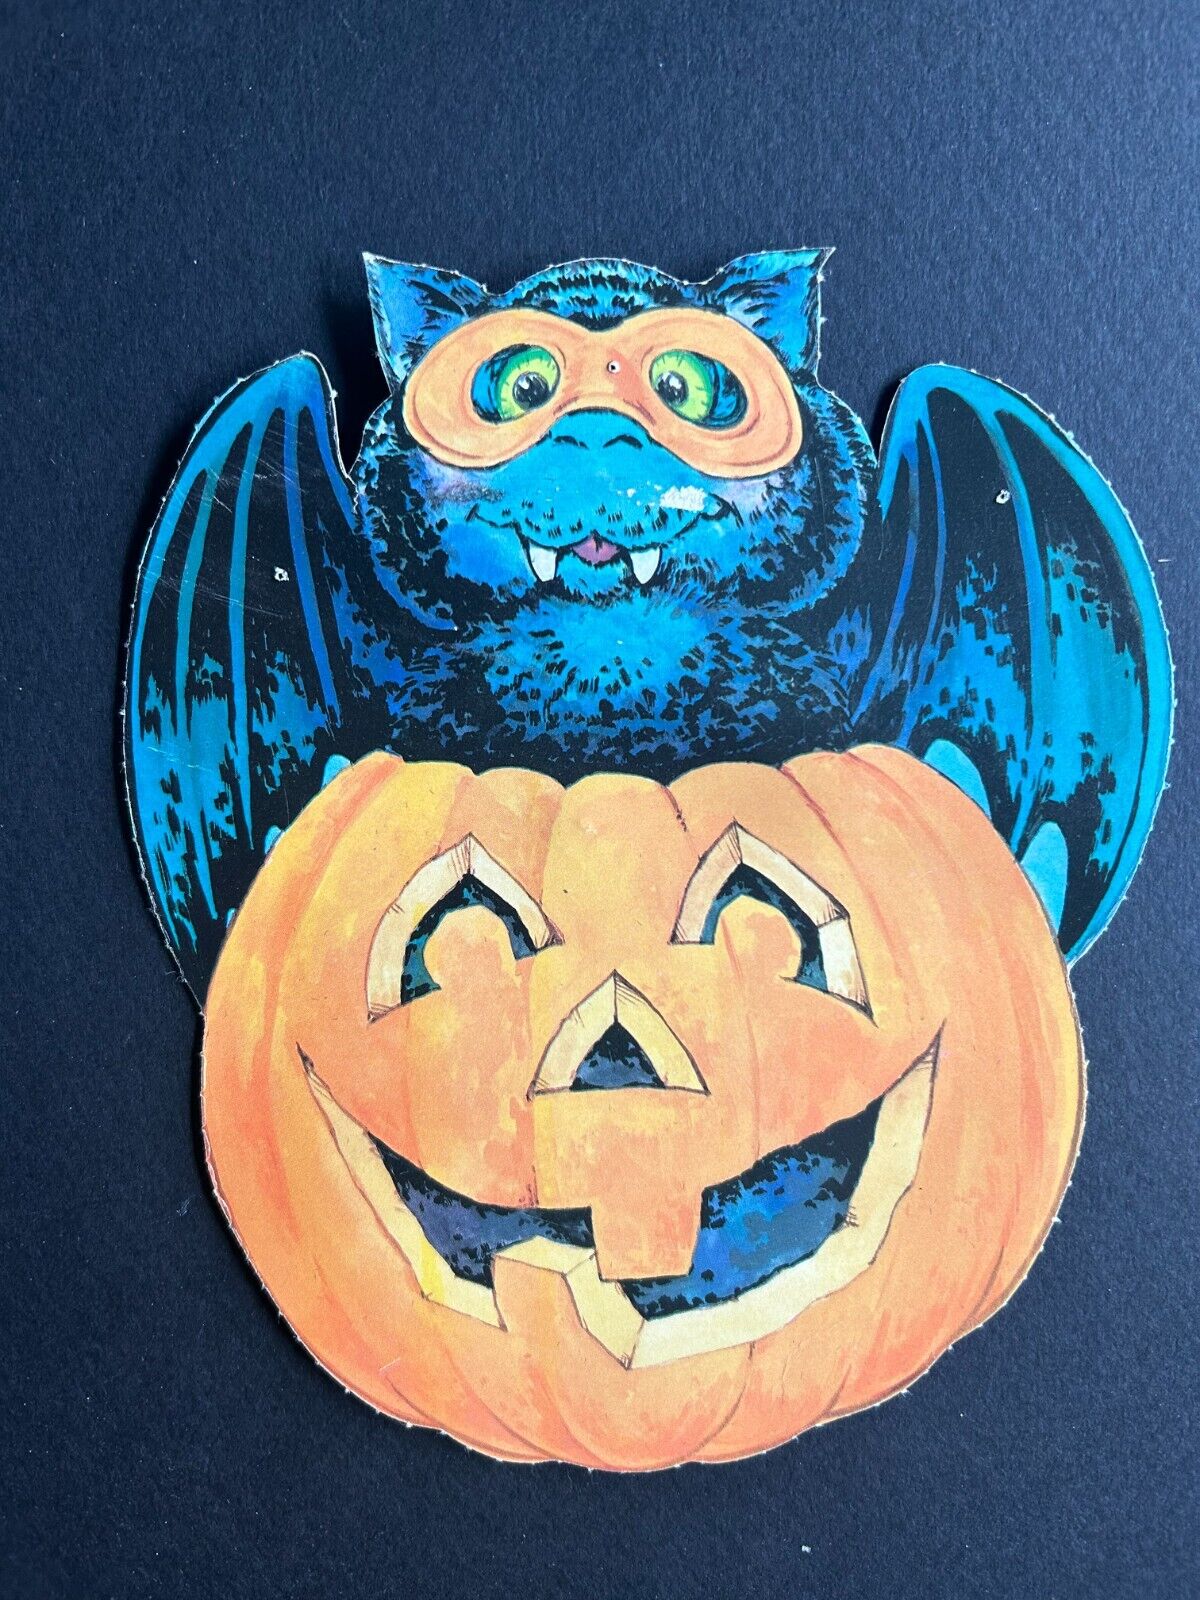 Vintage Halloween Decoration: Bat and Smiling Pumpkin